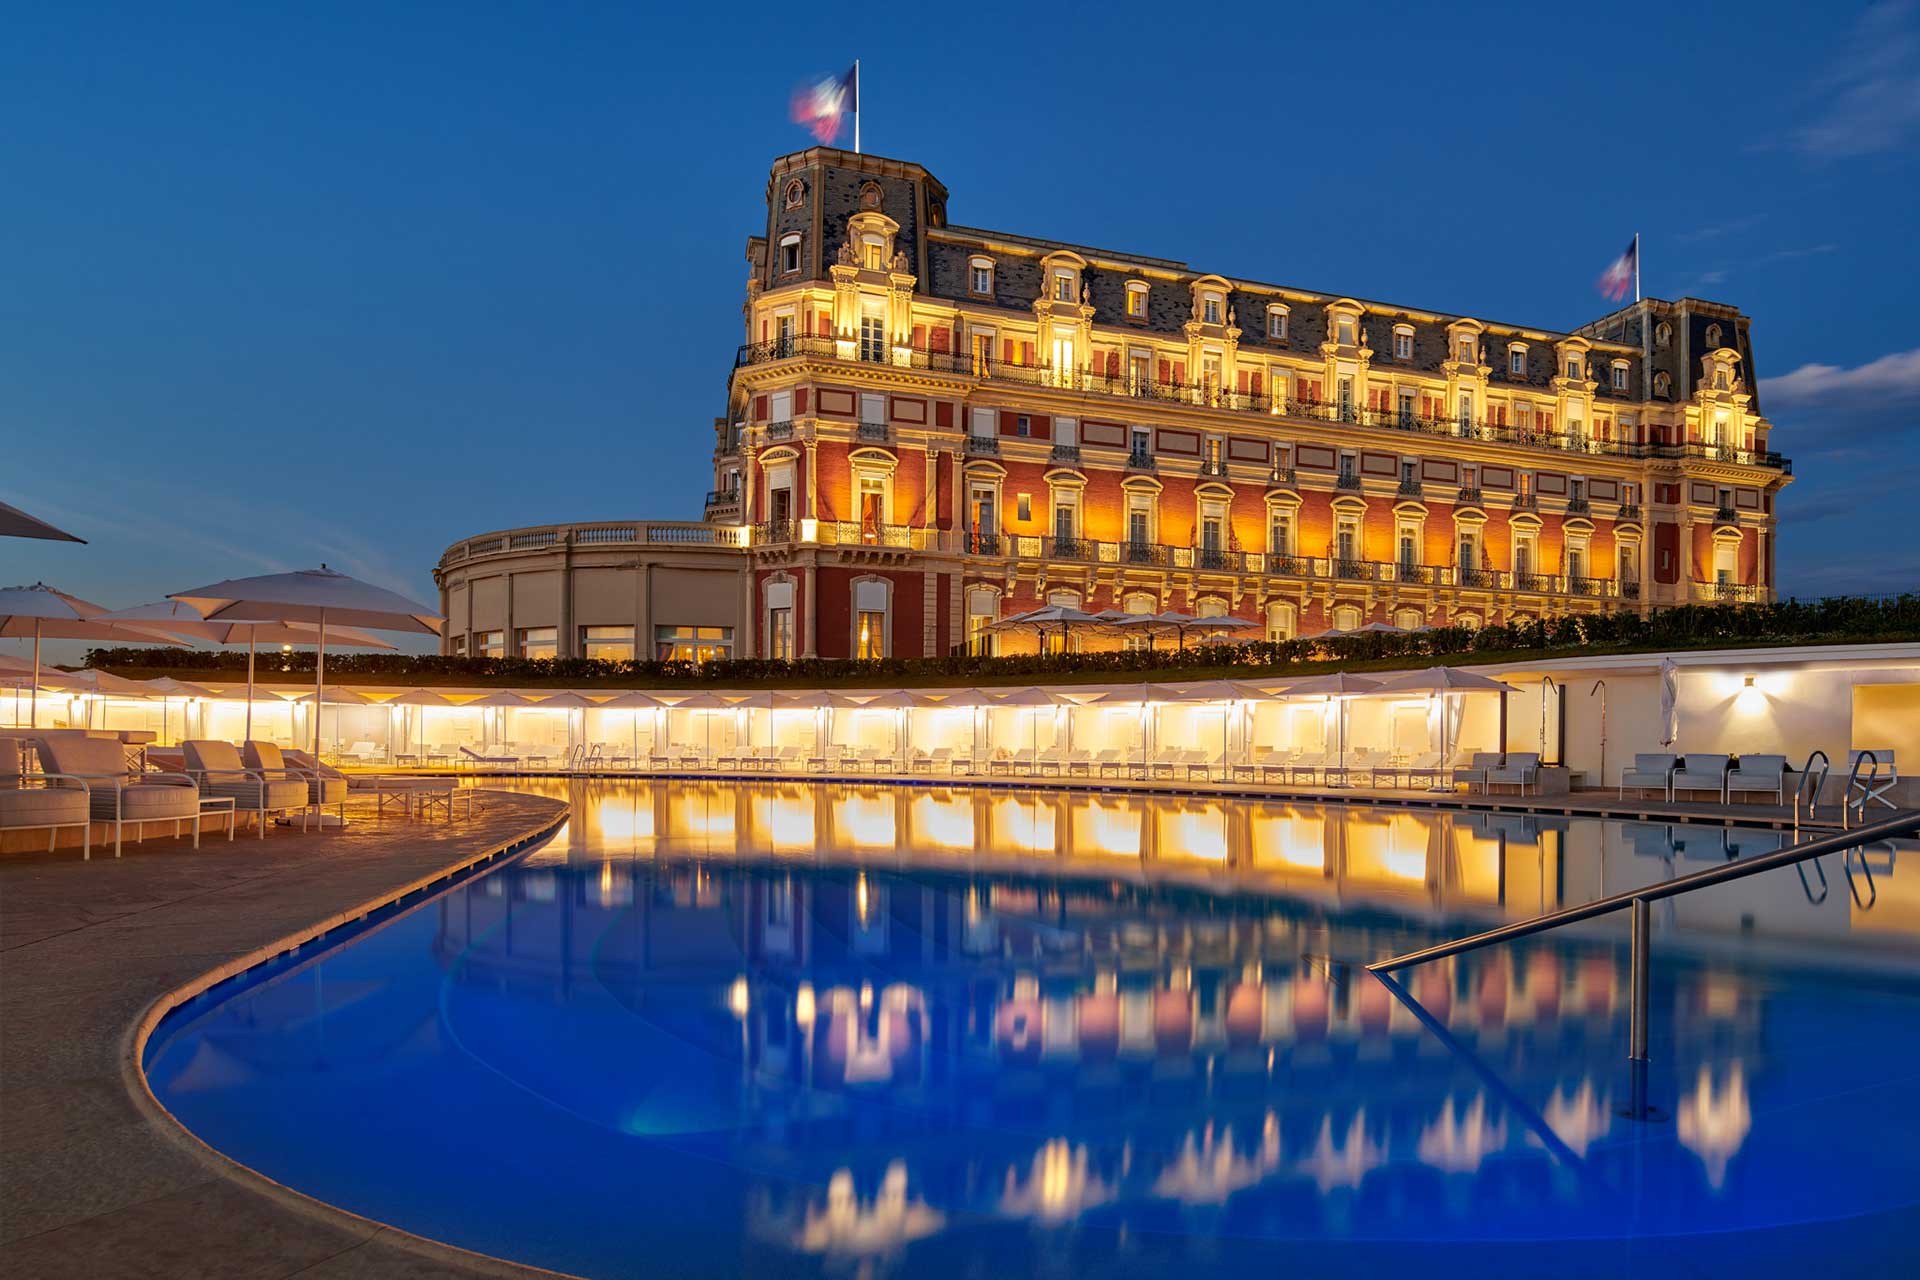 Golf-Reizen-Golf-Expedition-Frankrijk-Regio-Aquitaine-Hotel-du-Palais-pool-at-night